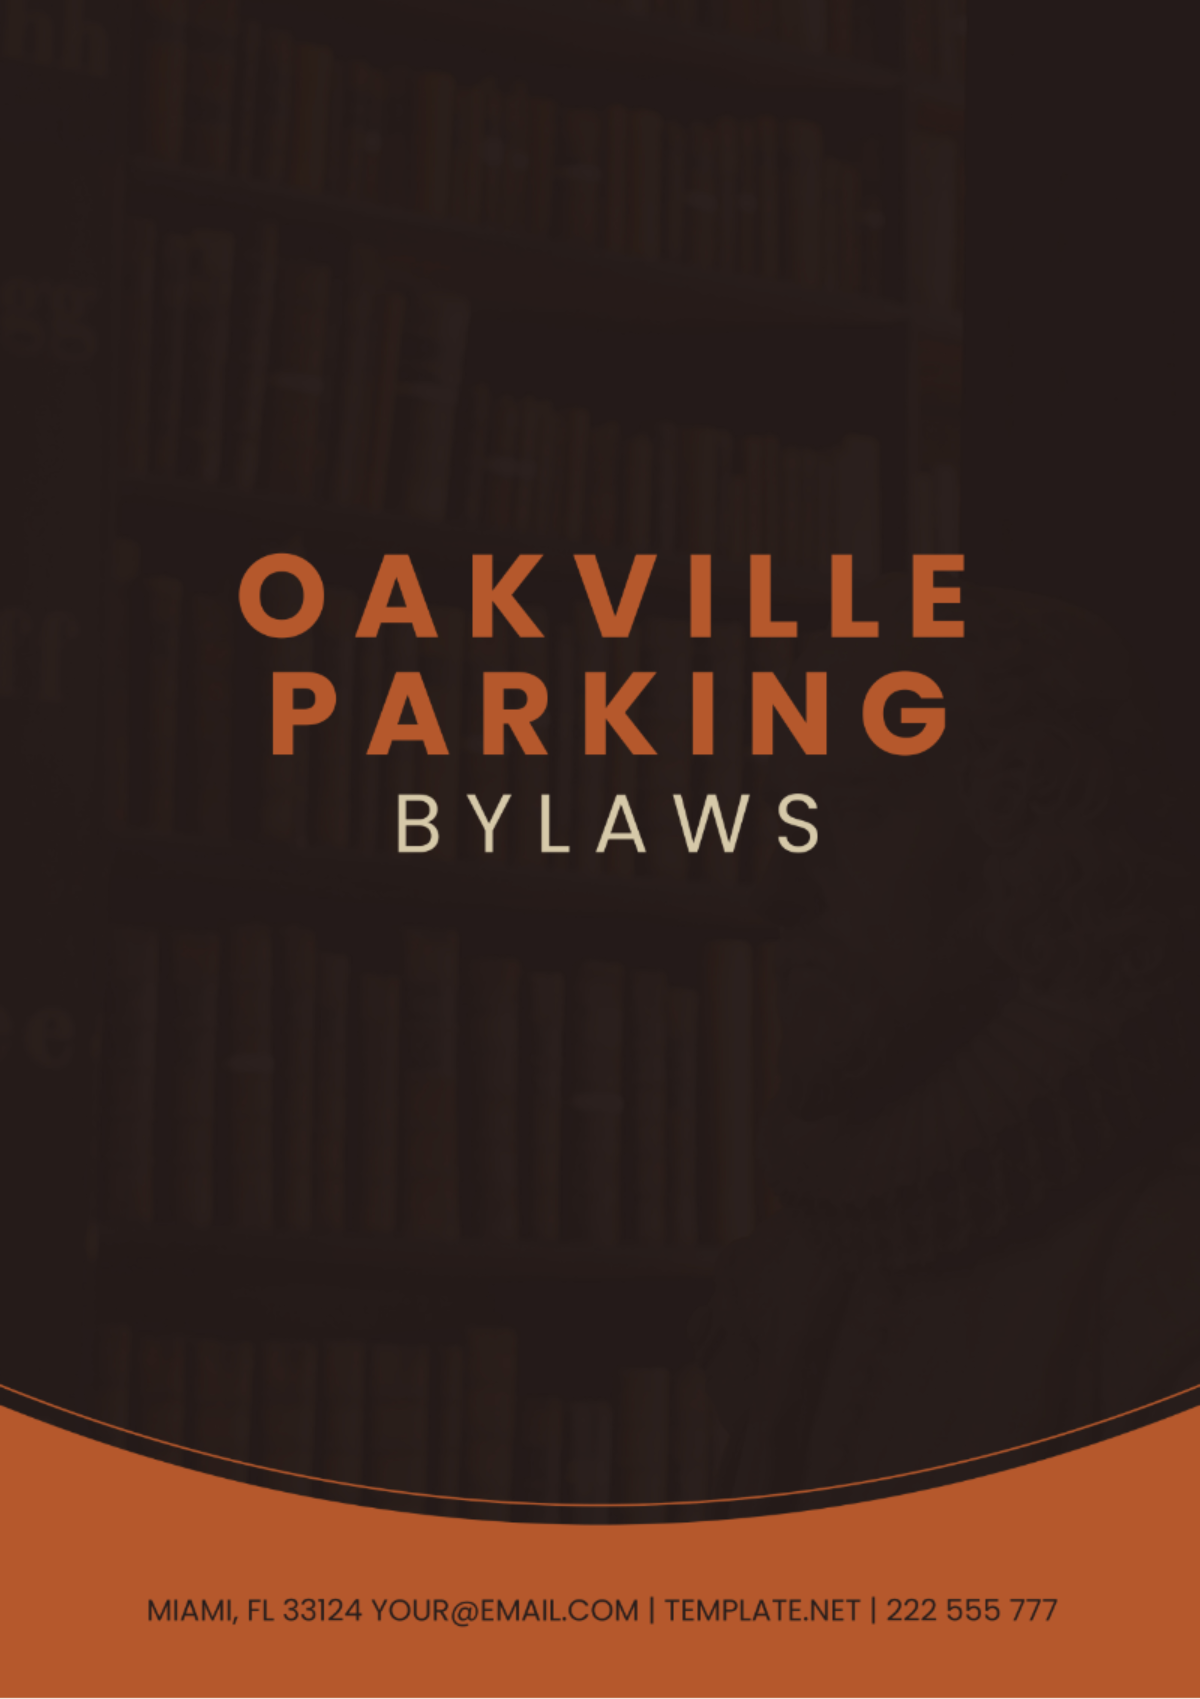 Oakville Parking Bylaws Template